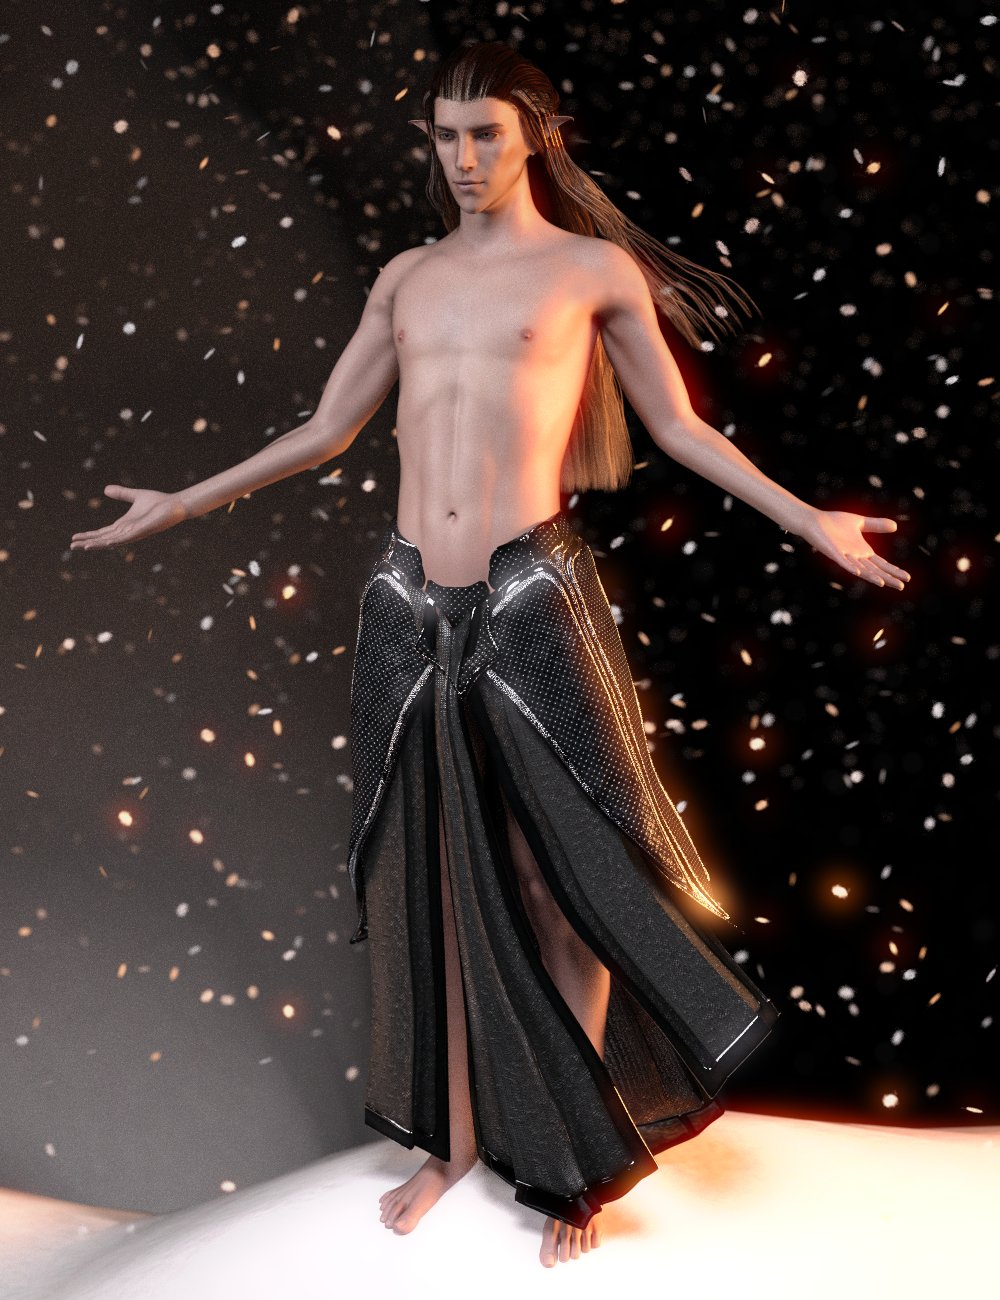 SY Fantastical Features Genesis 8 Male by: Sickleyield, 3D Models by Daz 3D